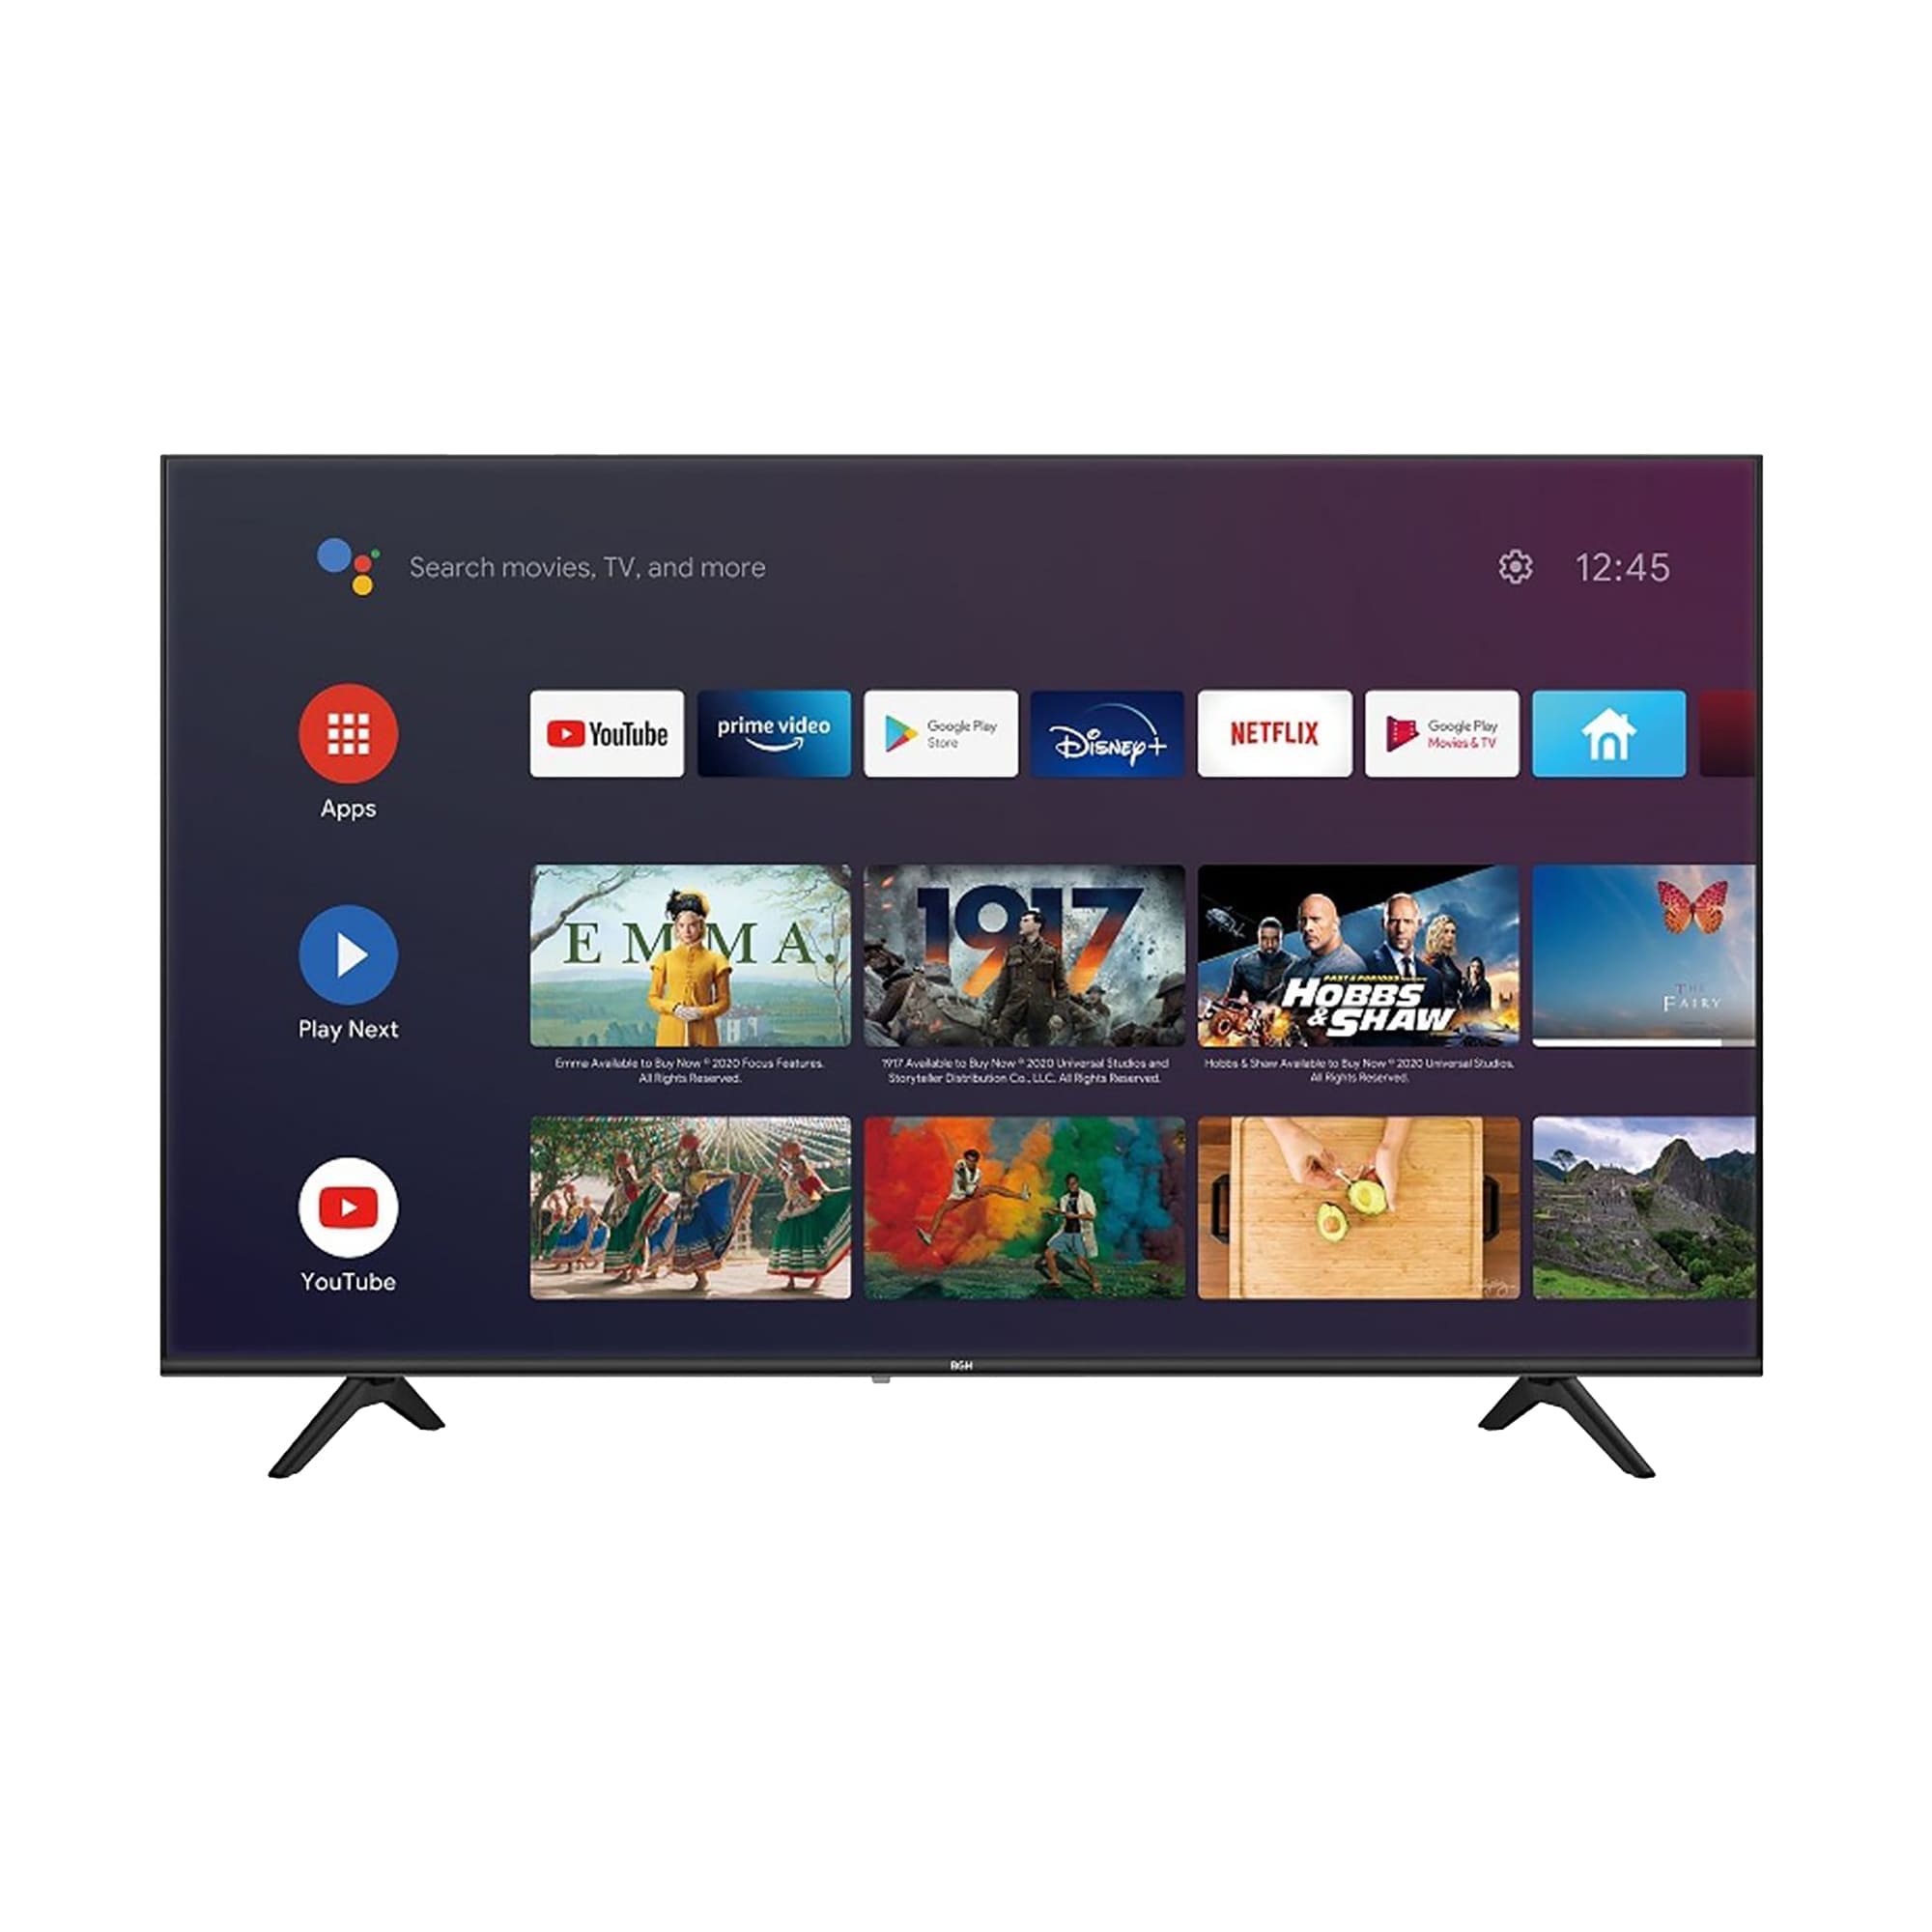 Smart TV 4K Ultra HD 50 BGH B5018UH6